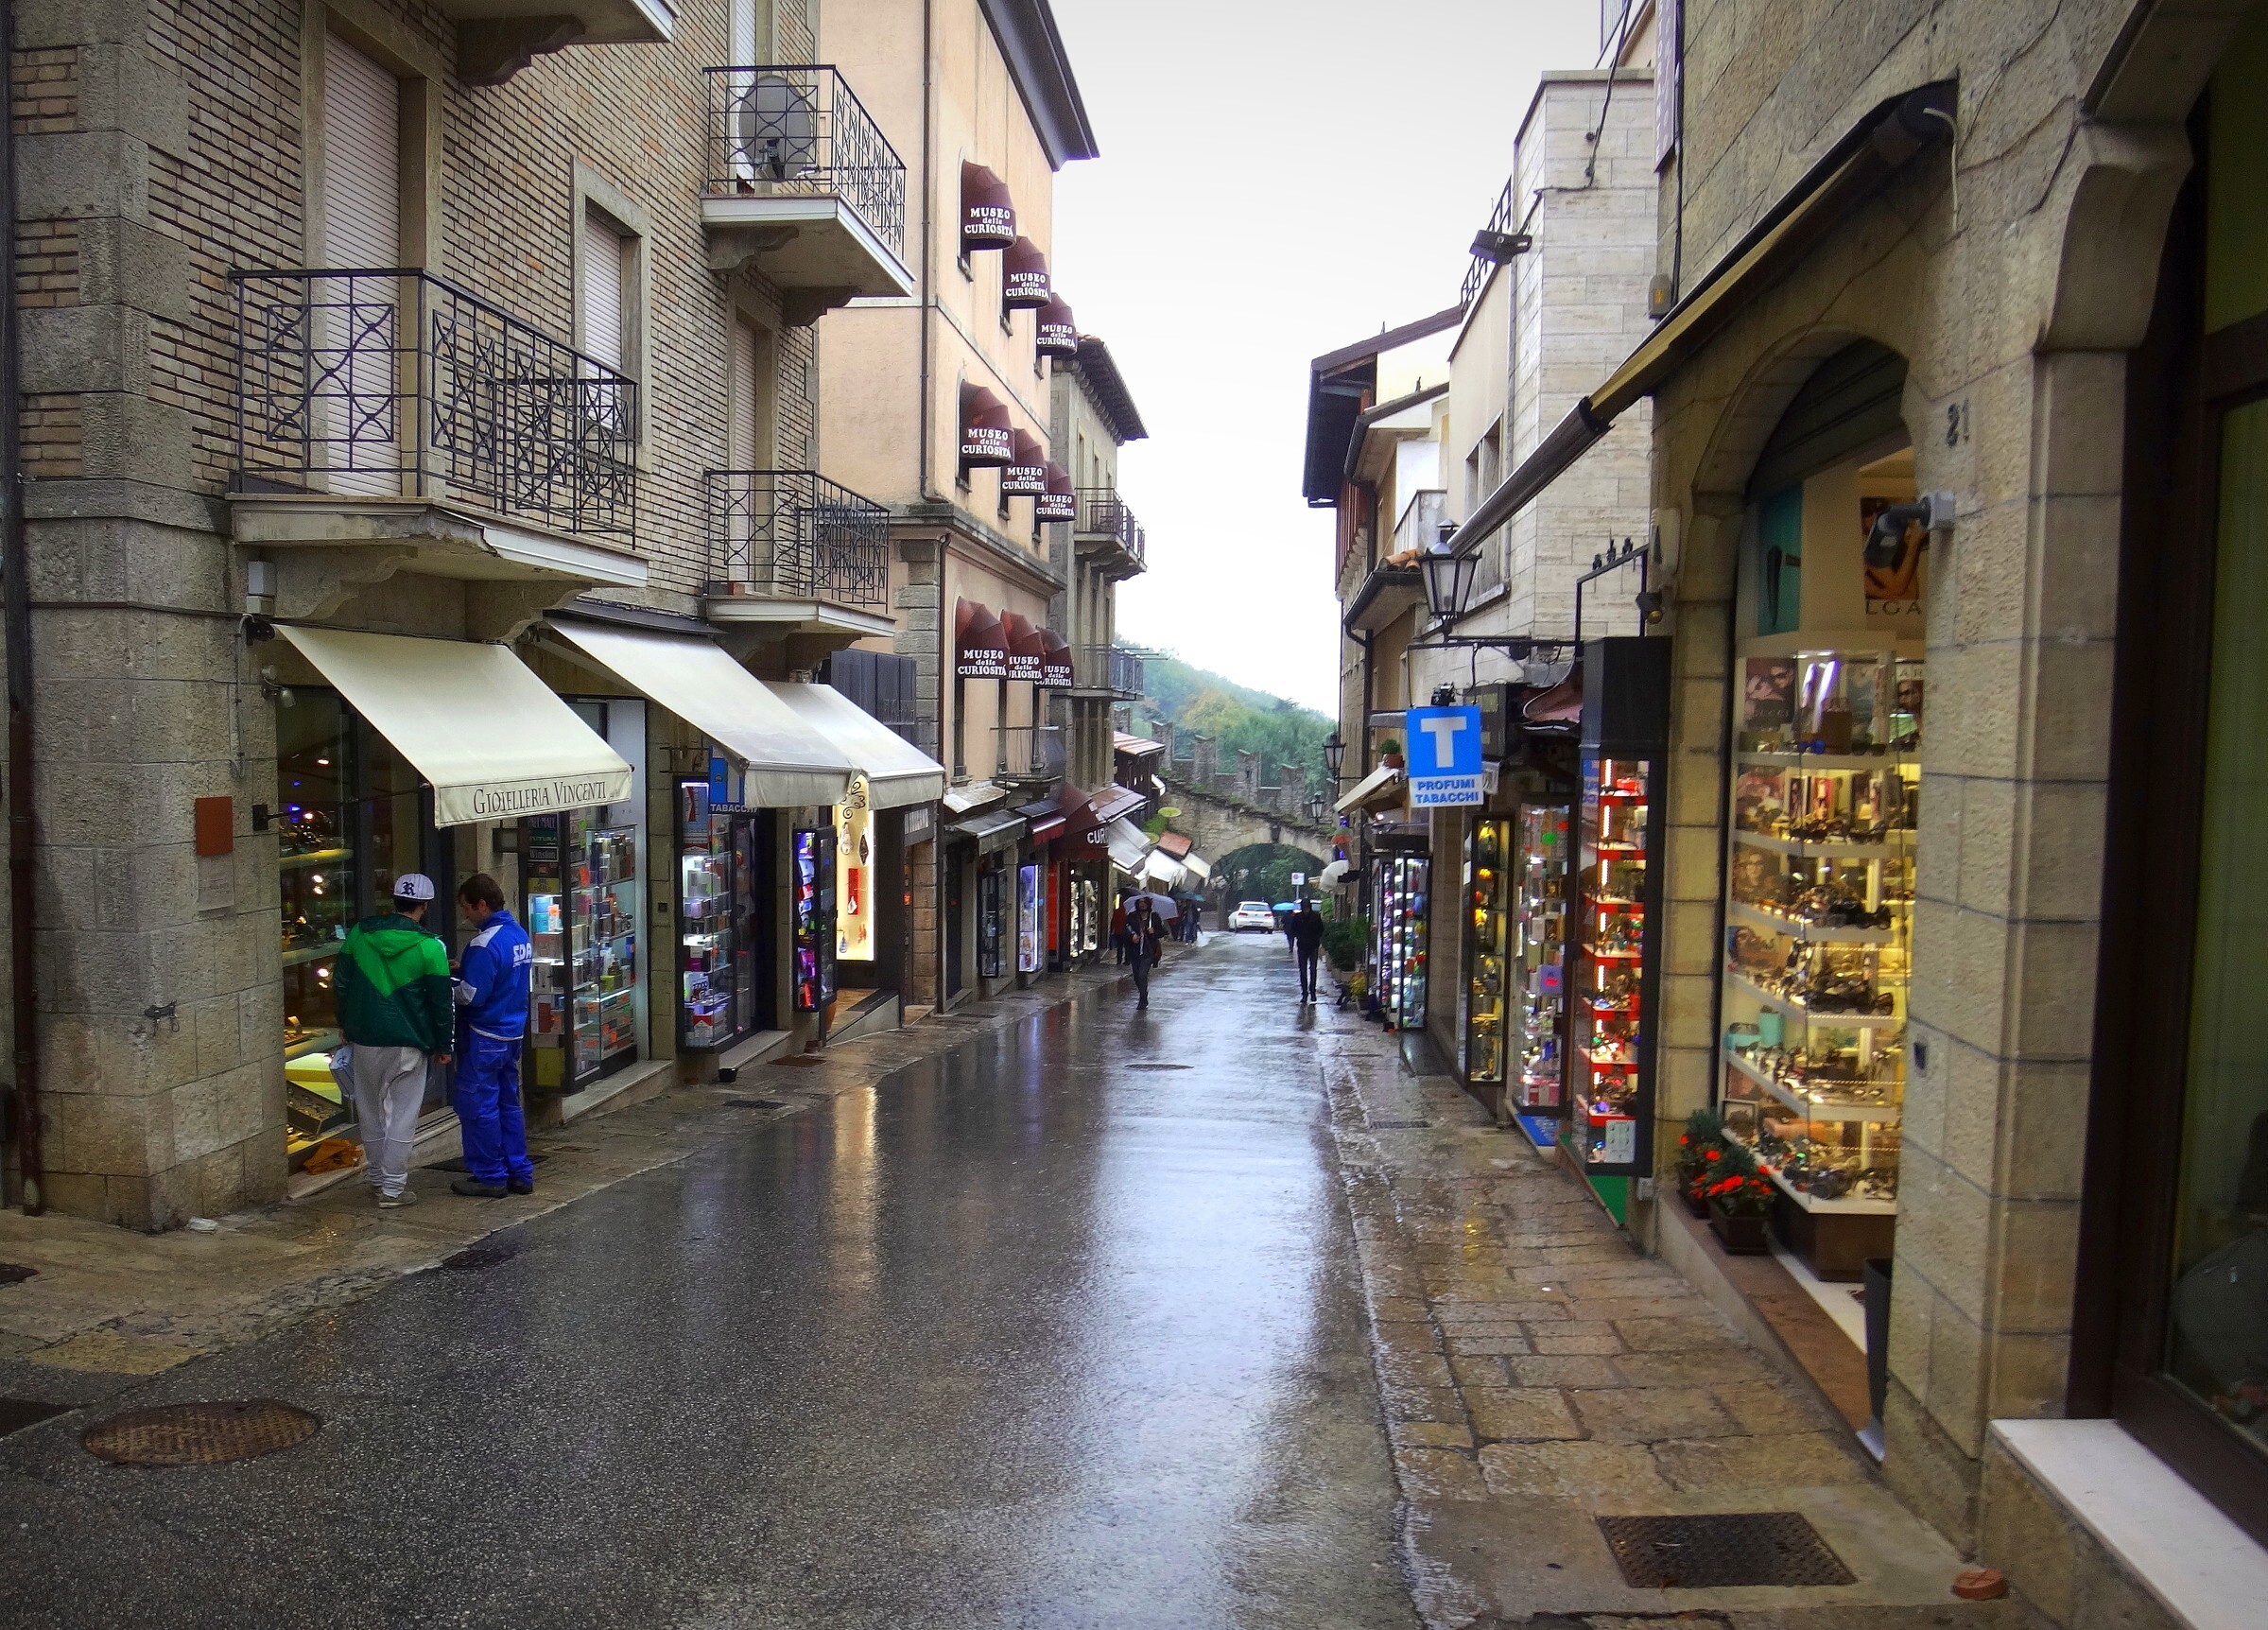 Dark Markets San Marino